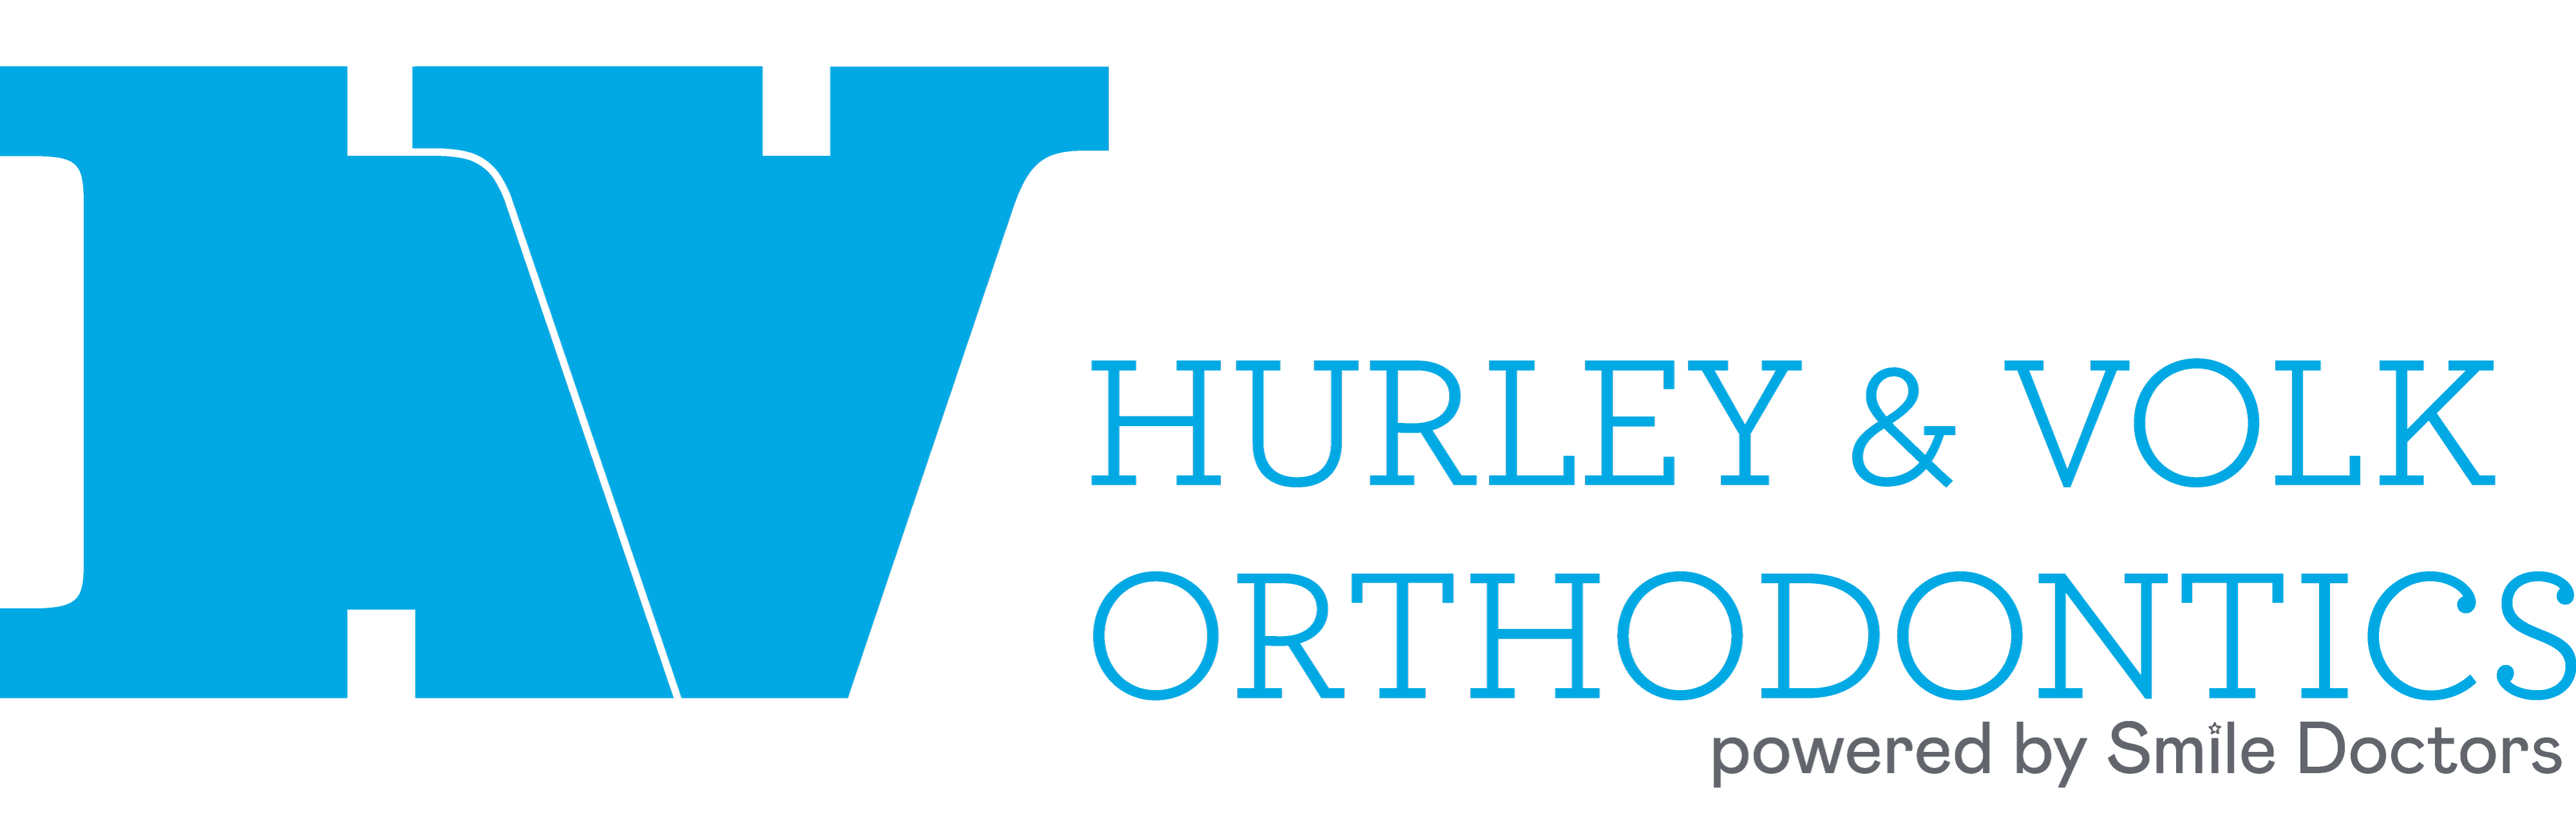 Hurley & Volk Orthodontics Powered by Smile Doctors